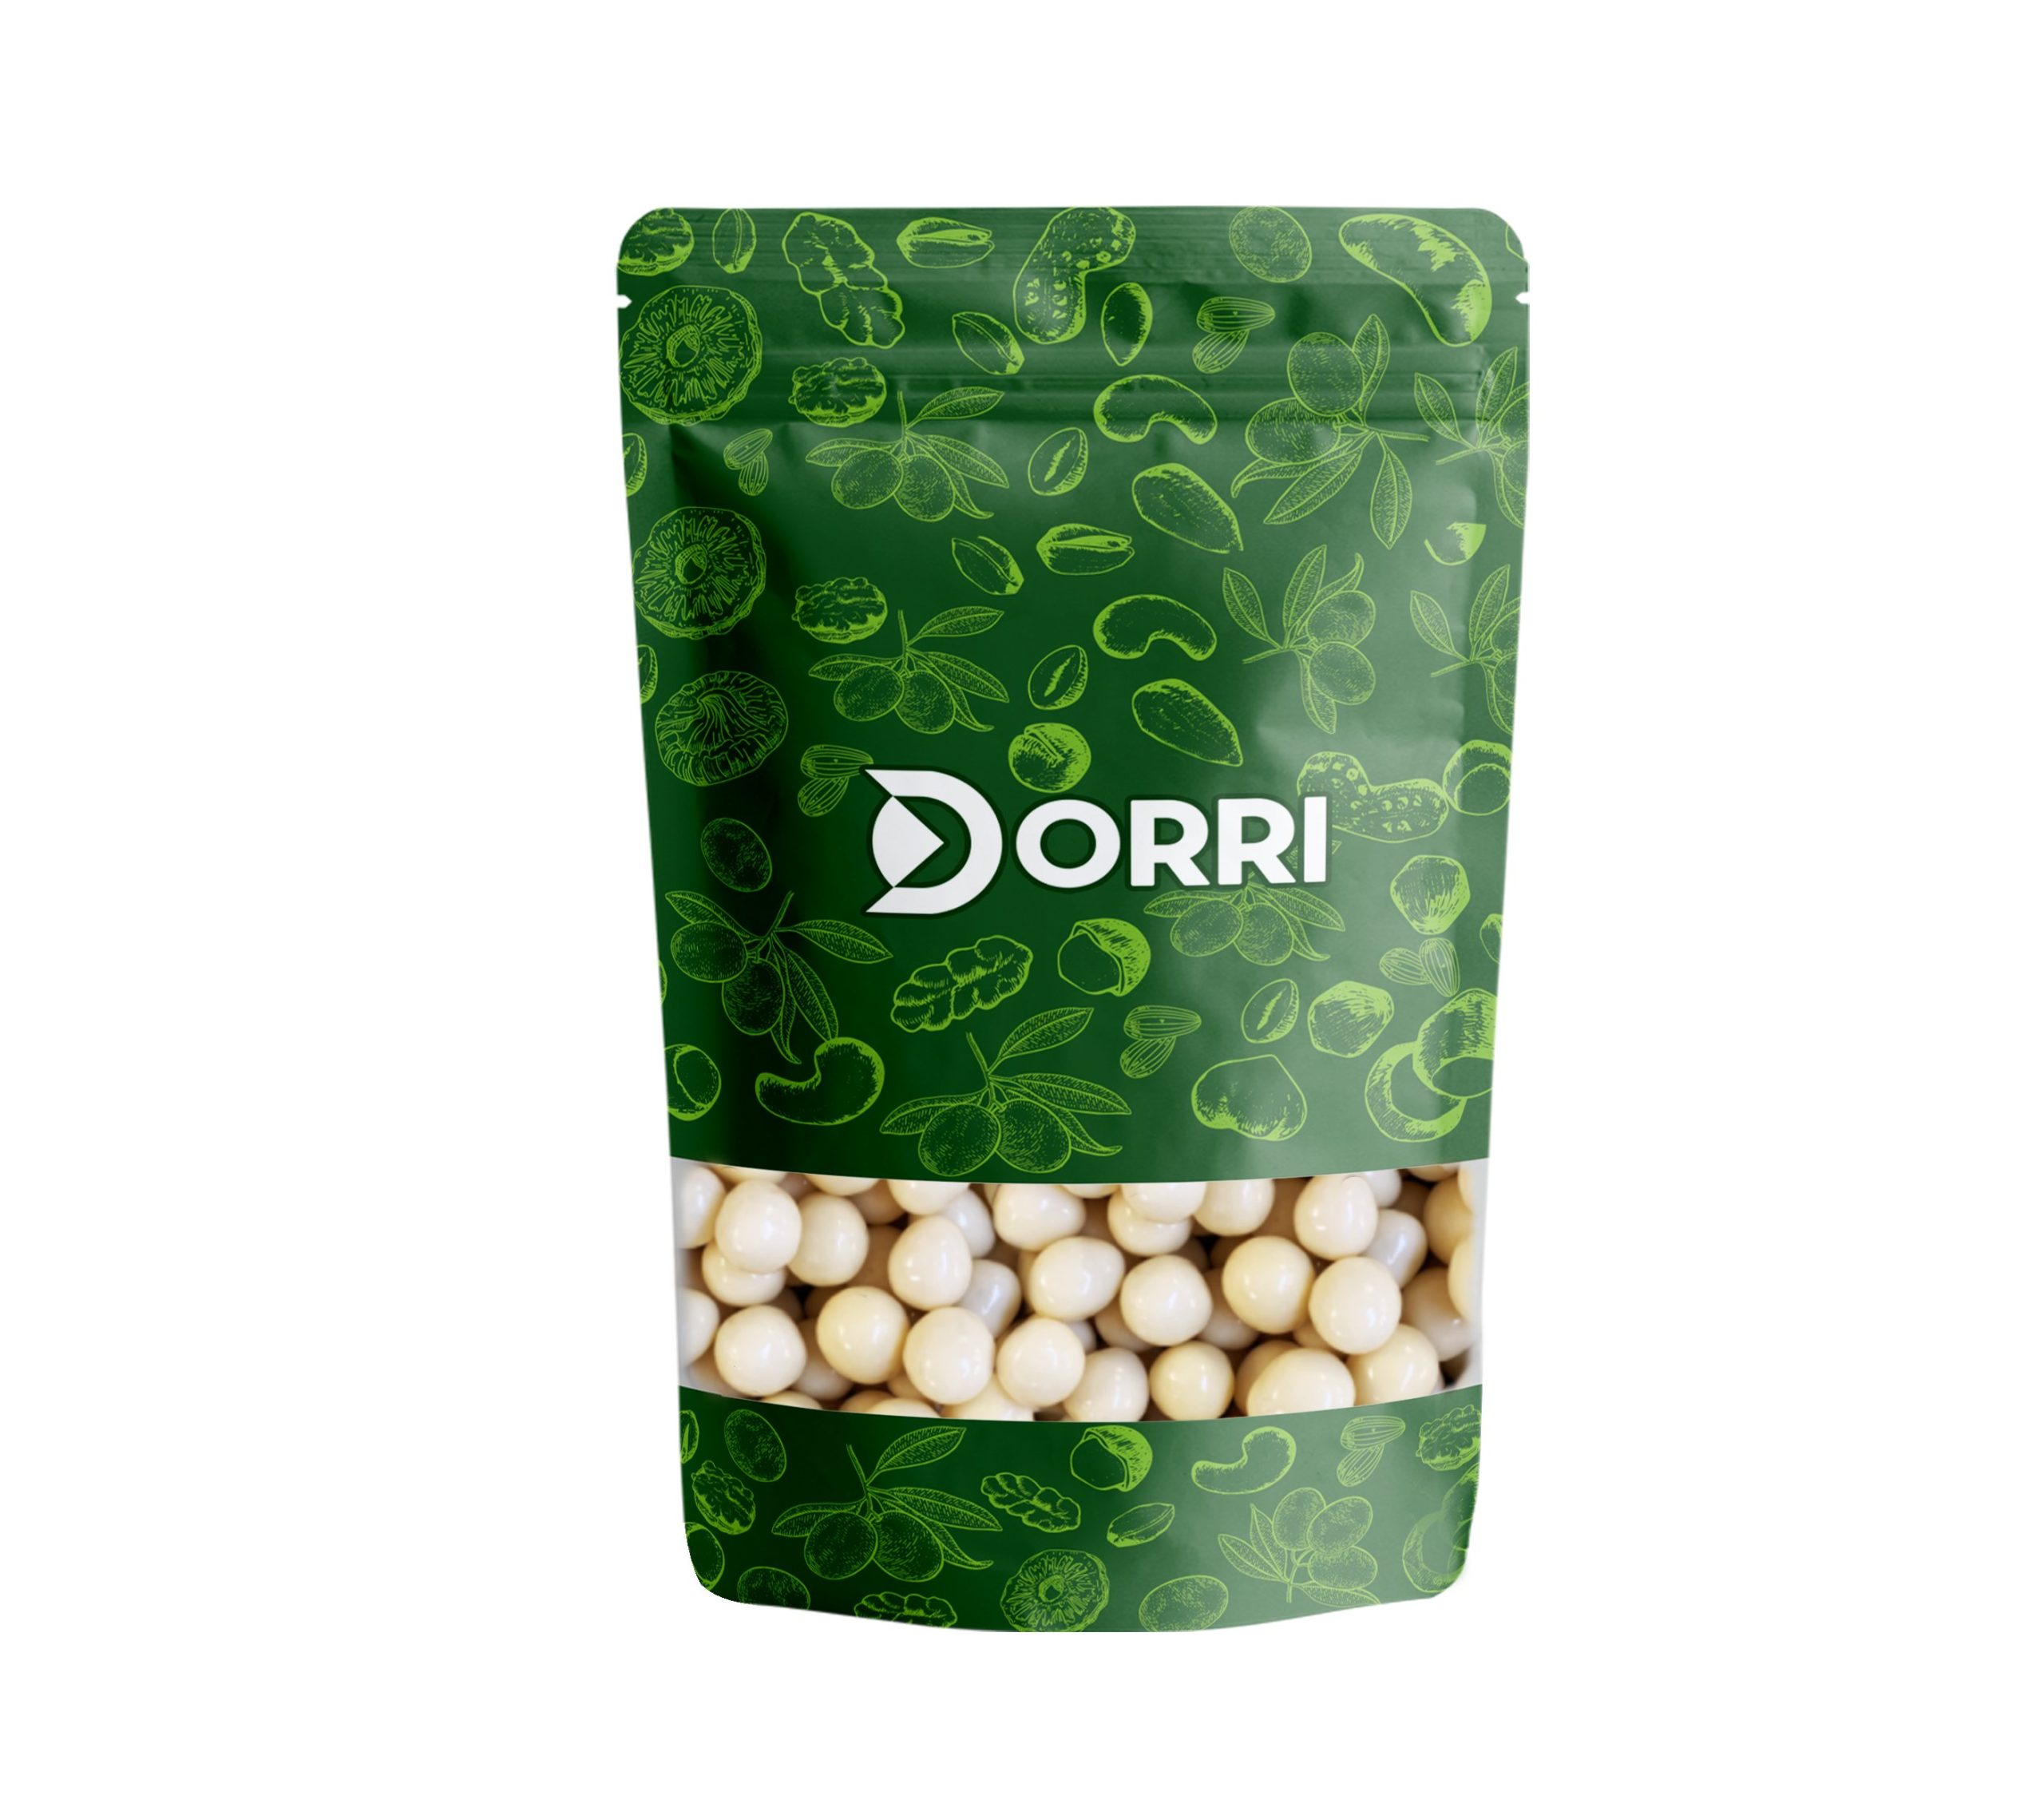 Dorri - Yogurt Covered Hazelnuts